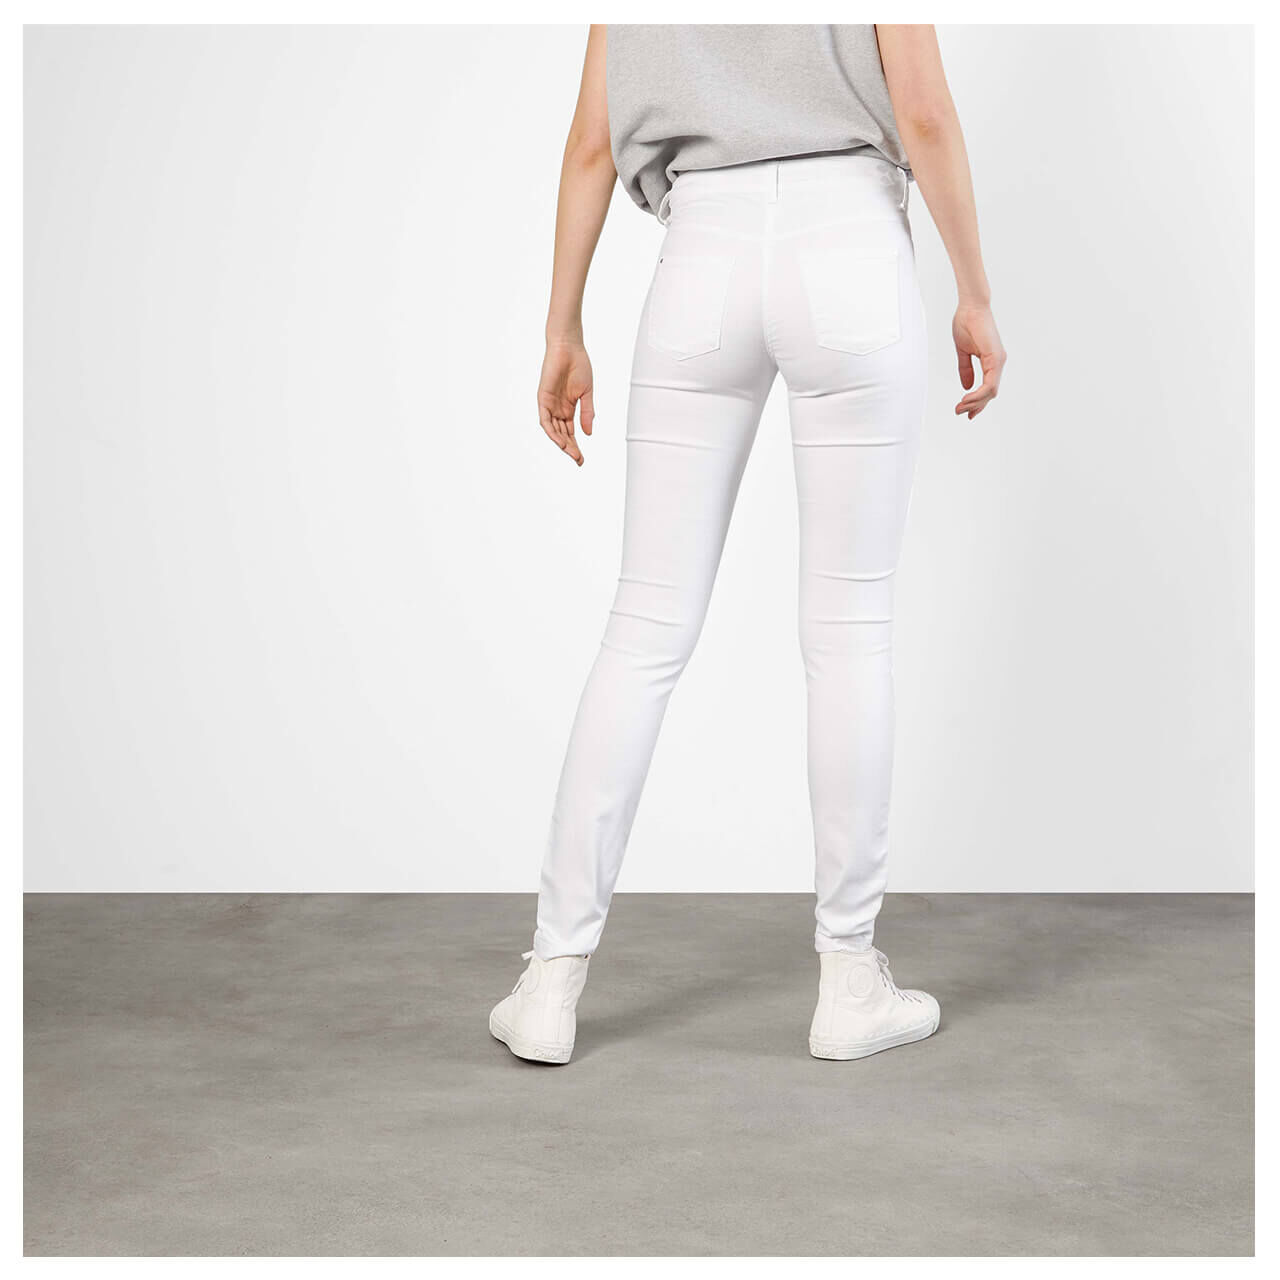 MAC Jeans Dream Skinny für Damen in Weiß, FarbNr.: D010